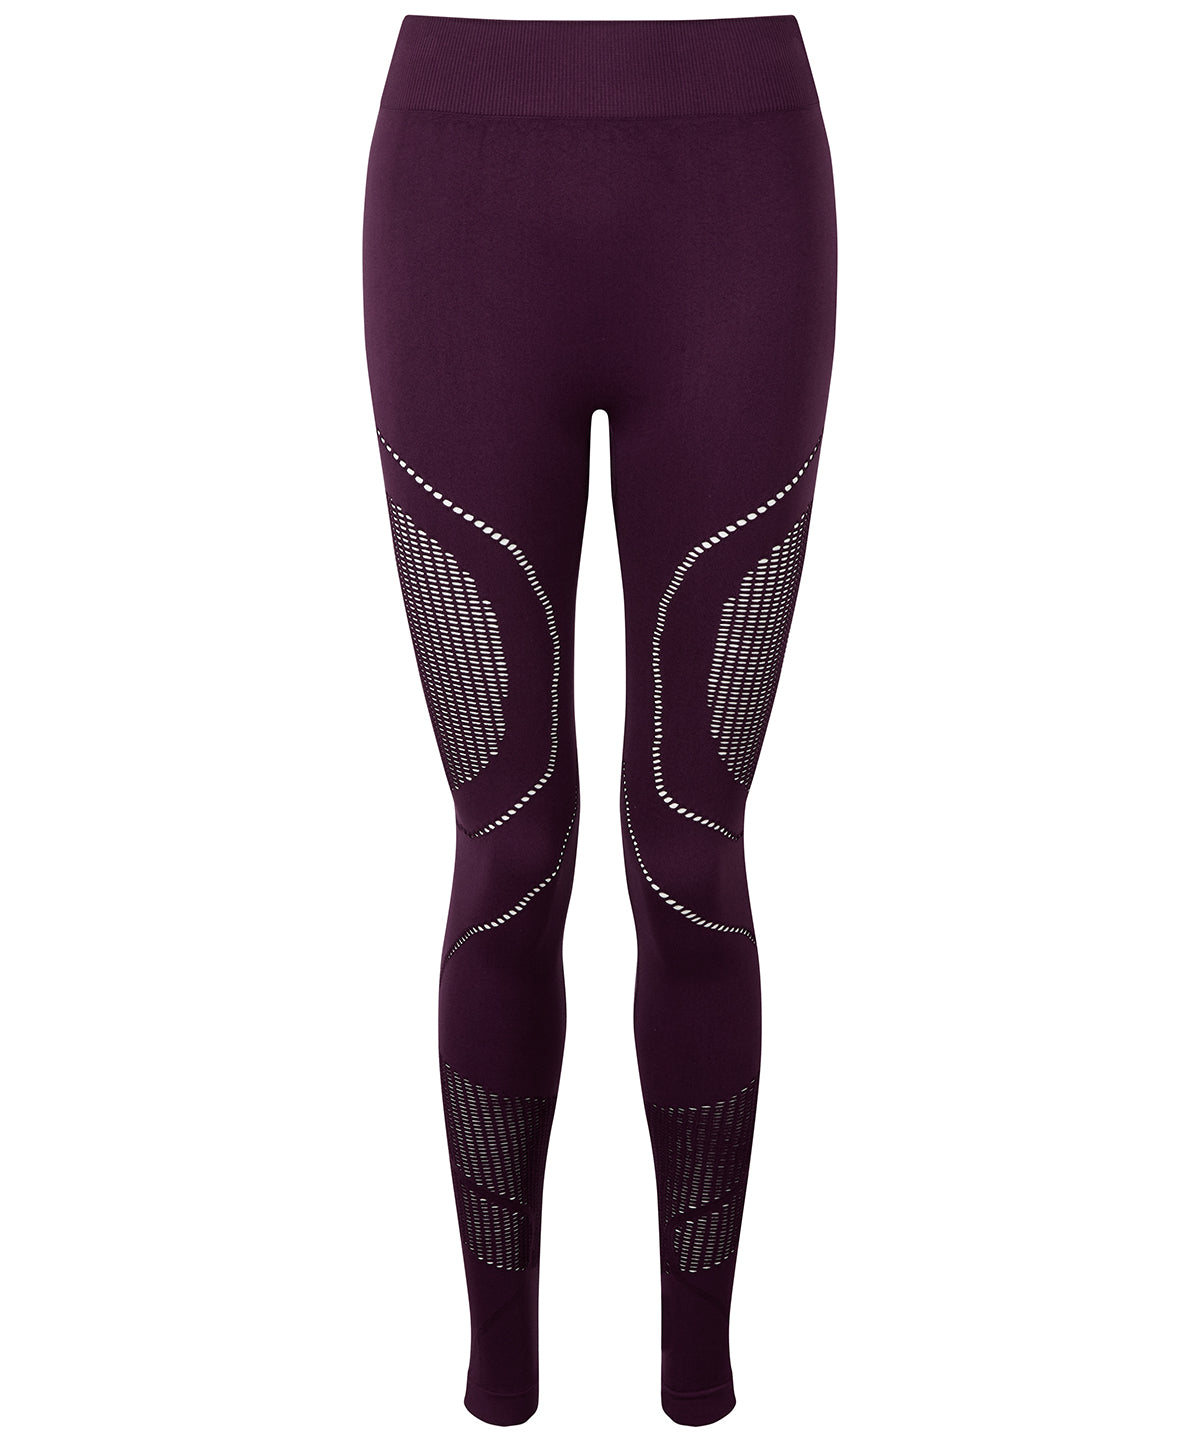 Women's TriDri® seamless '3D fit' multi-sport reveal leggings